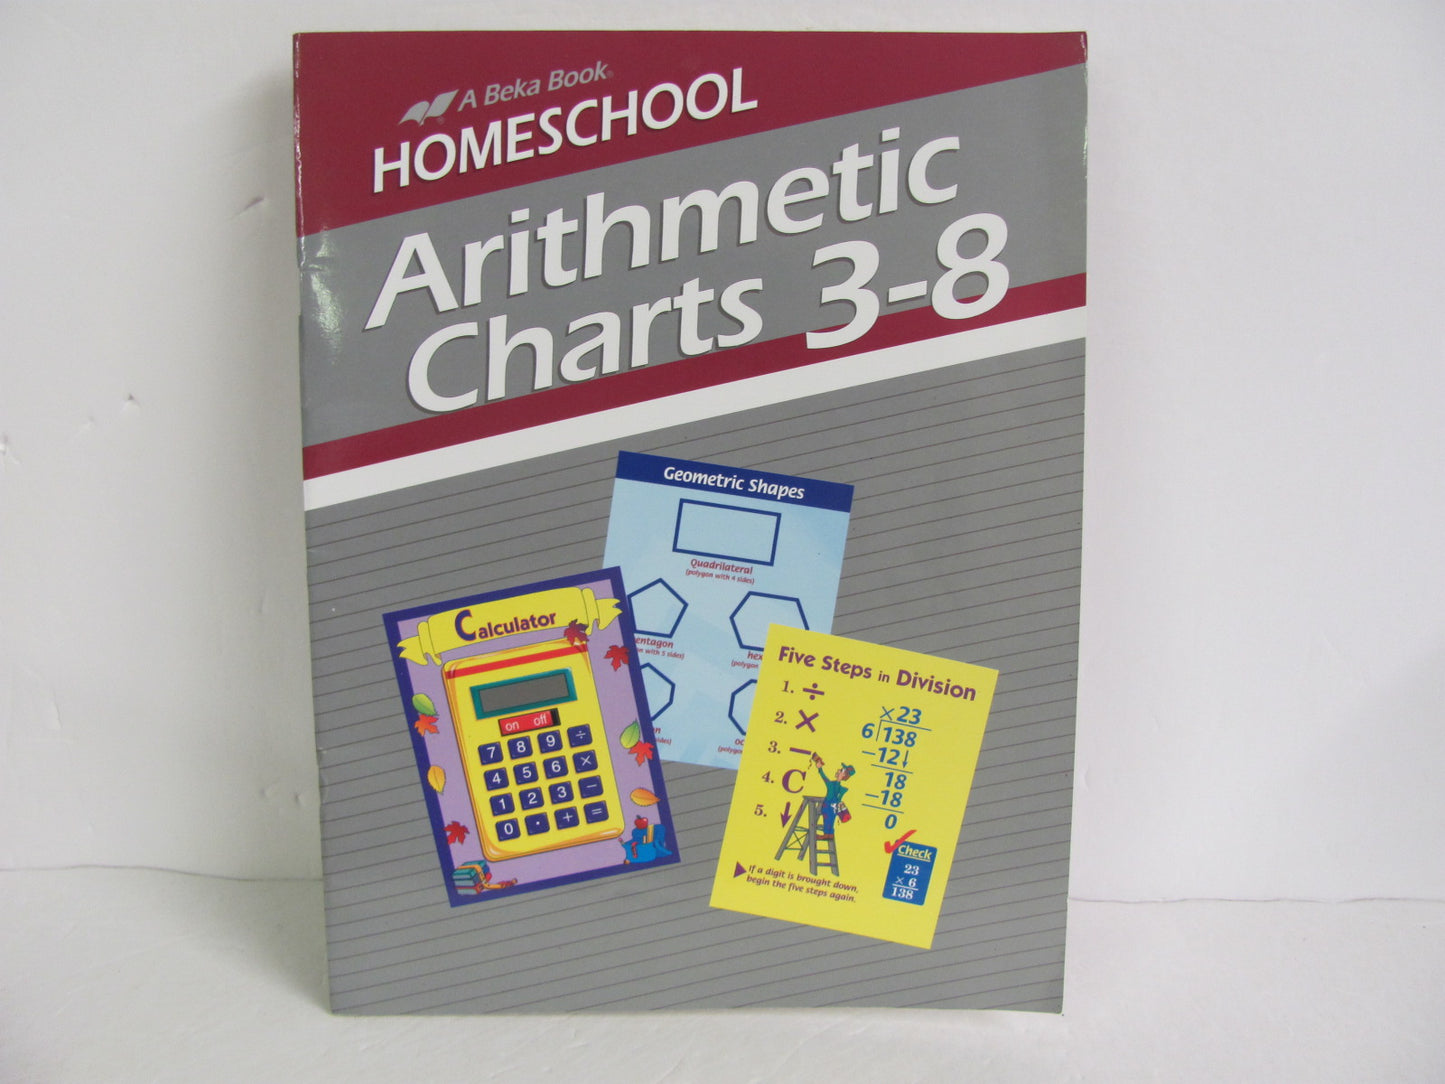 Arithmetic Charts 3-8 Abeka Pre-Owned Elementary Mathematics Textbooks